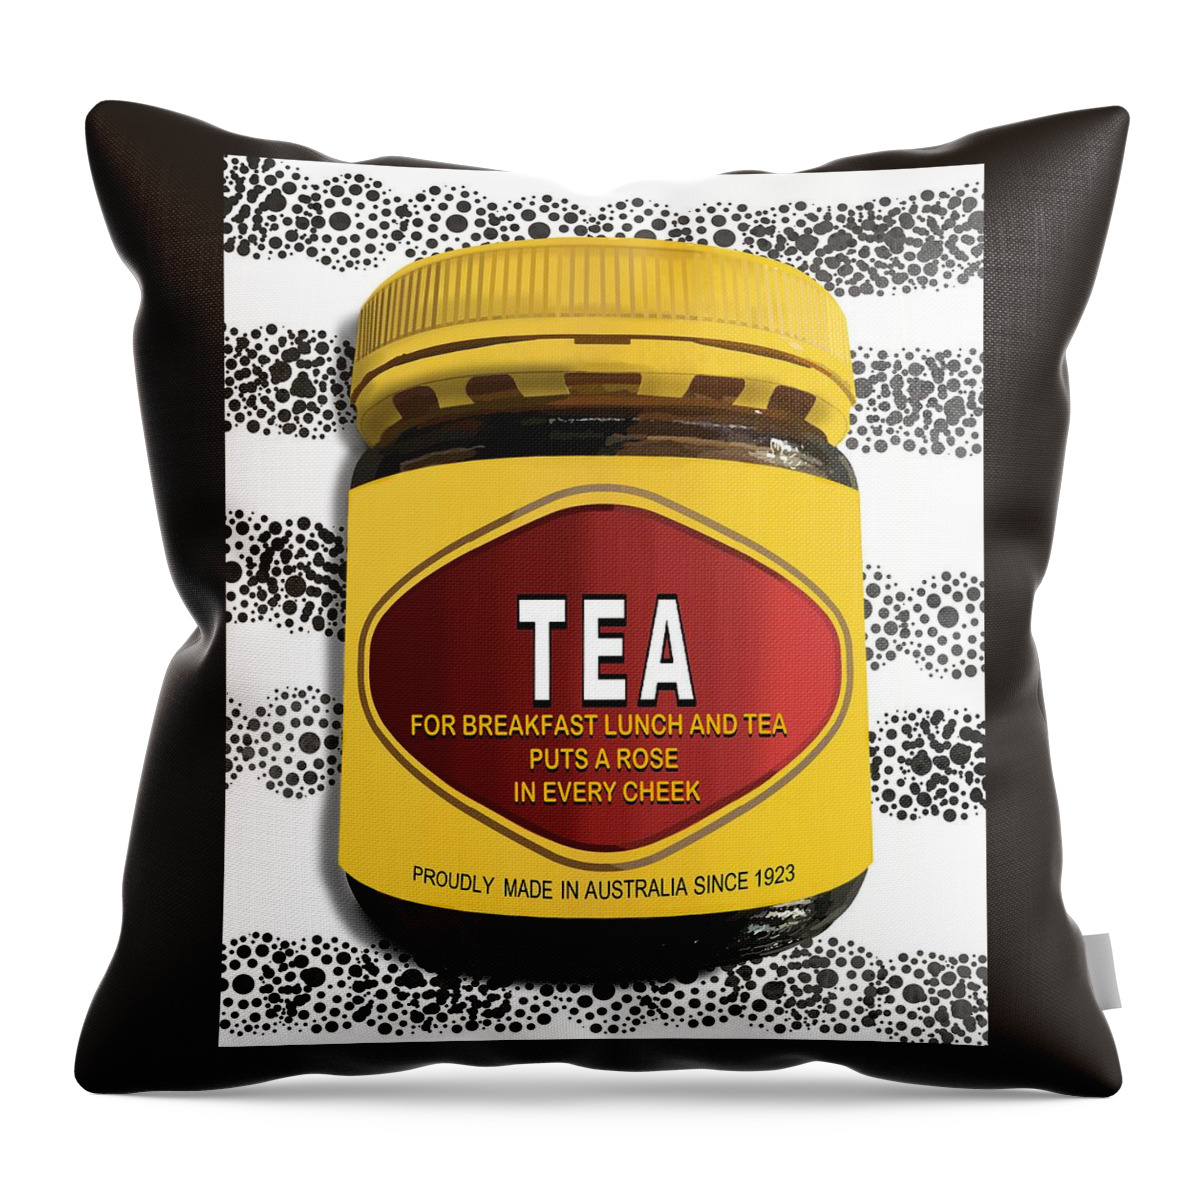 Australiana Throw Pillow featuring the drawing Australiana Pop Art Tea As Ingredient by Joan Stratton